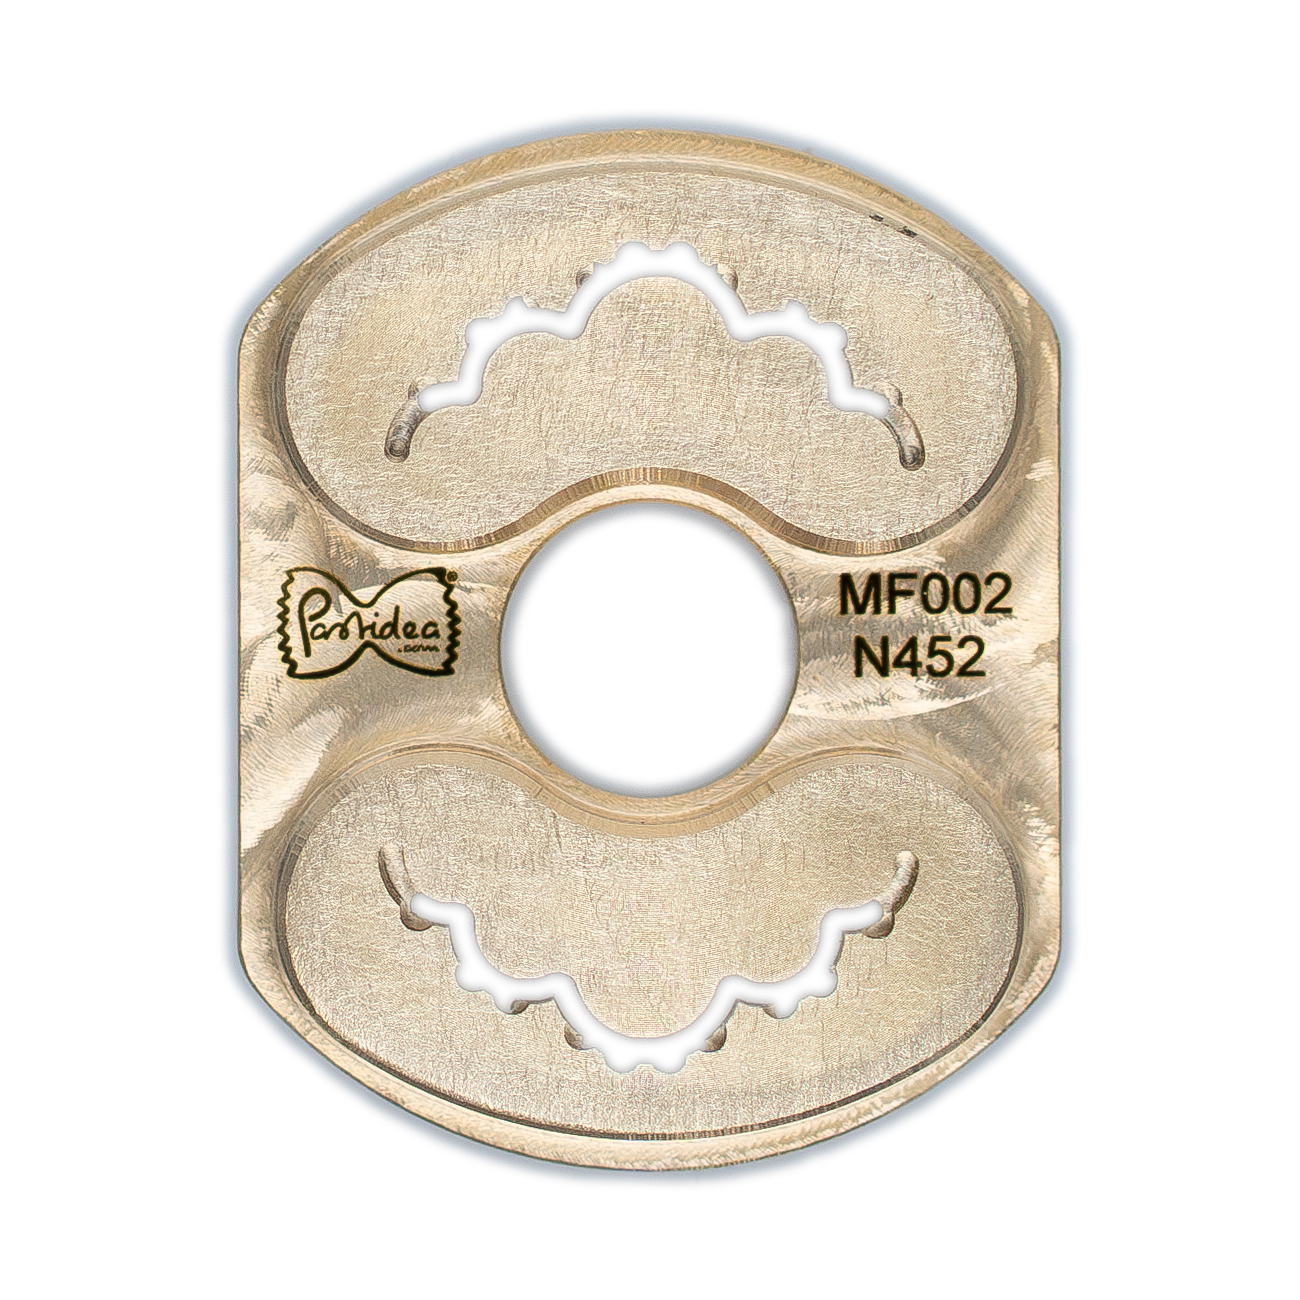 Pasta insert (type 2) in bronze spaghetti quadri chitarra 2,5x2,5mm for Philips pasta maker Avance / 7000 series (insert holder required) (copy)